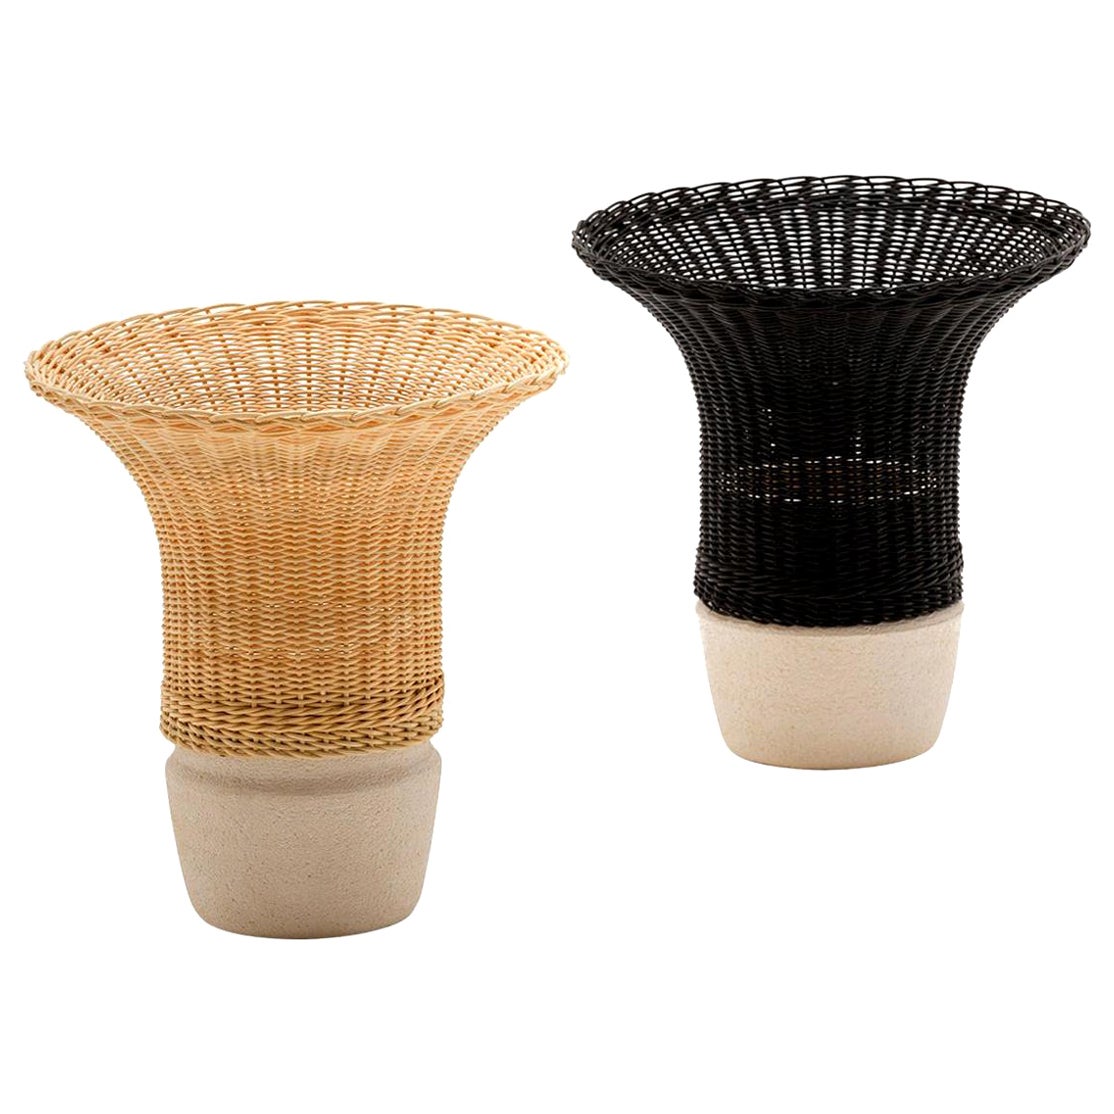 Nodo, Vase aus gewebtem Korbweide und Keramik, 21. Jahrhundert, B/Natural, von Bottega Intreccio